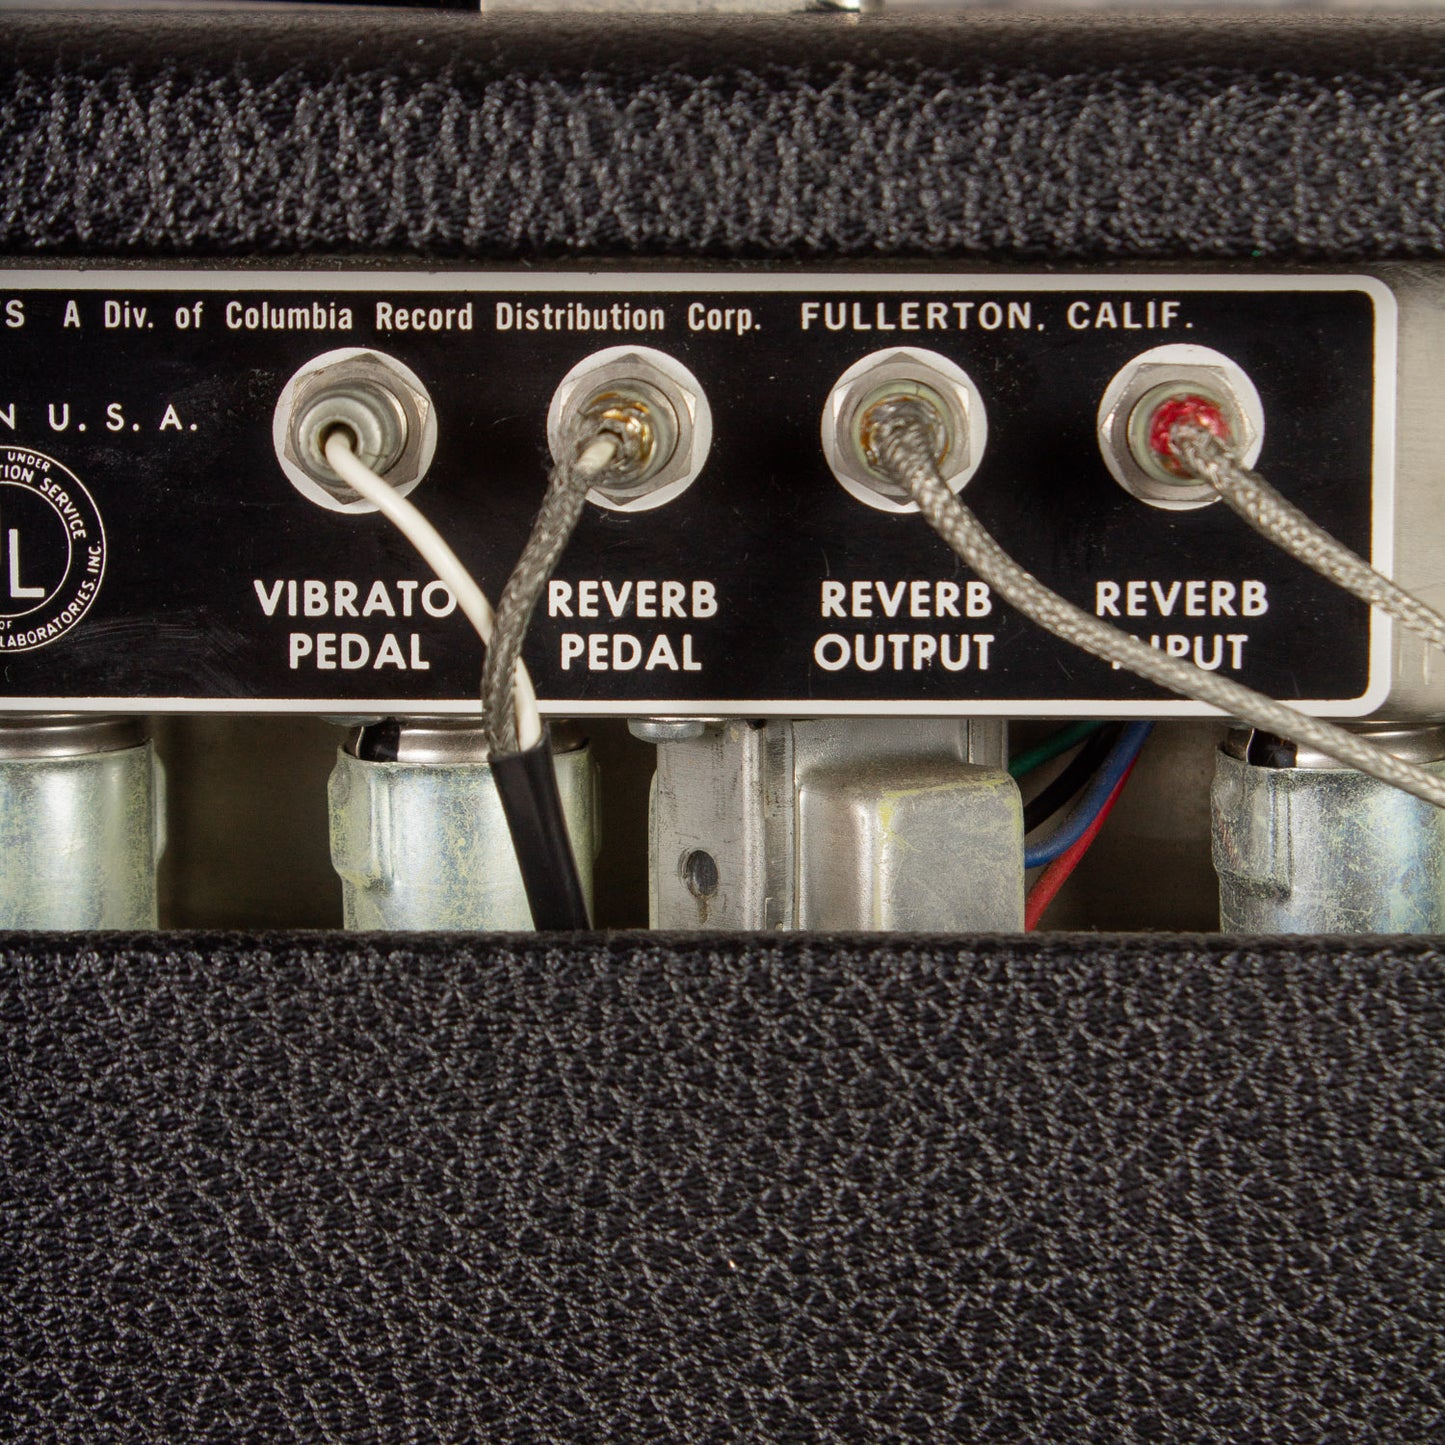 1966 Fender Super Reverb